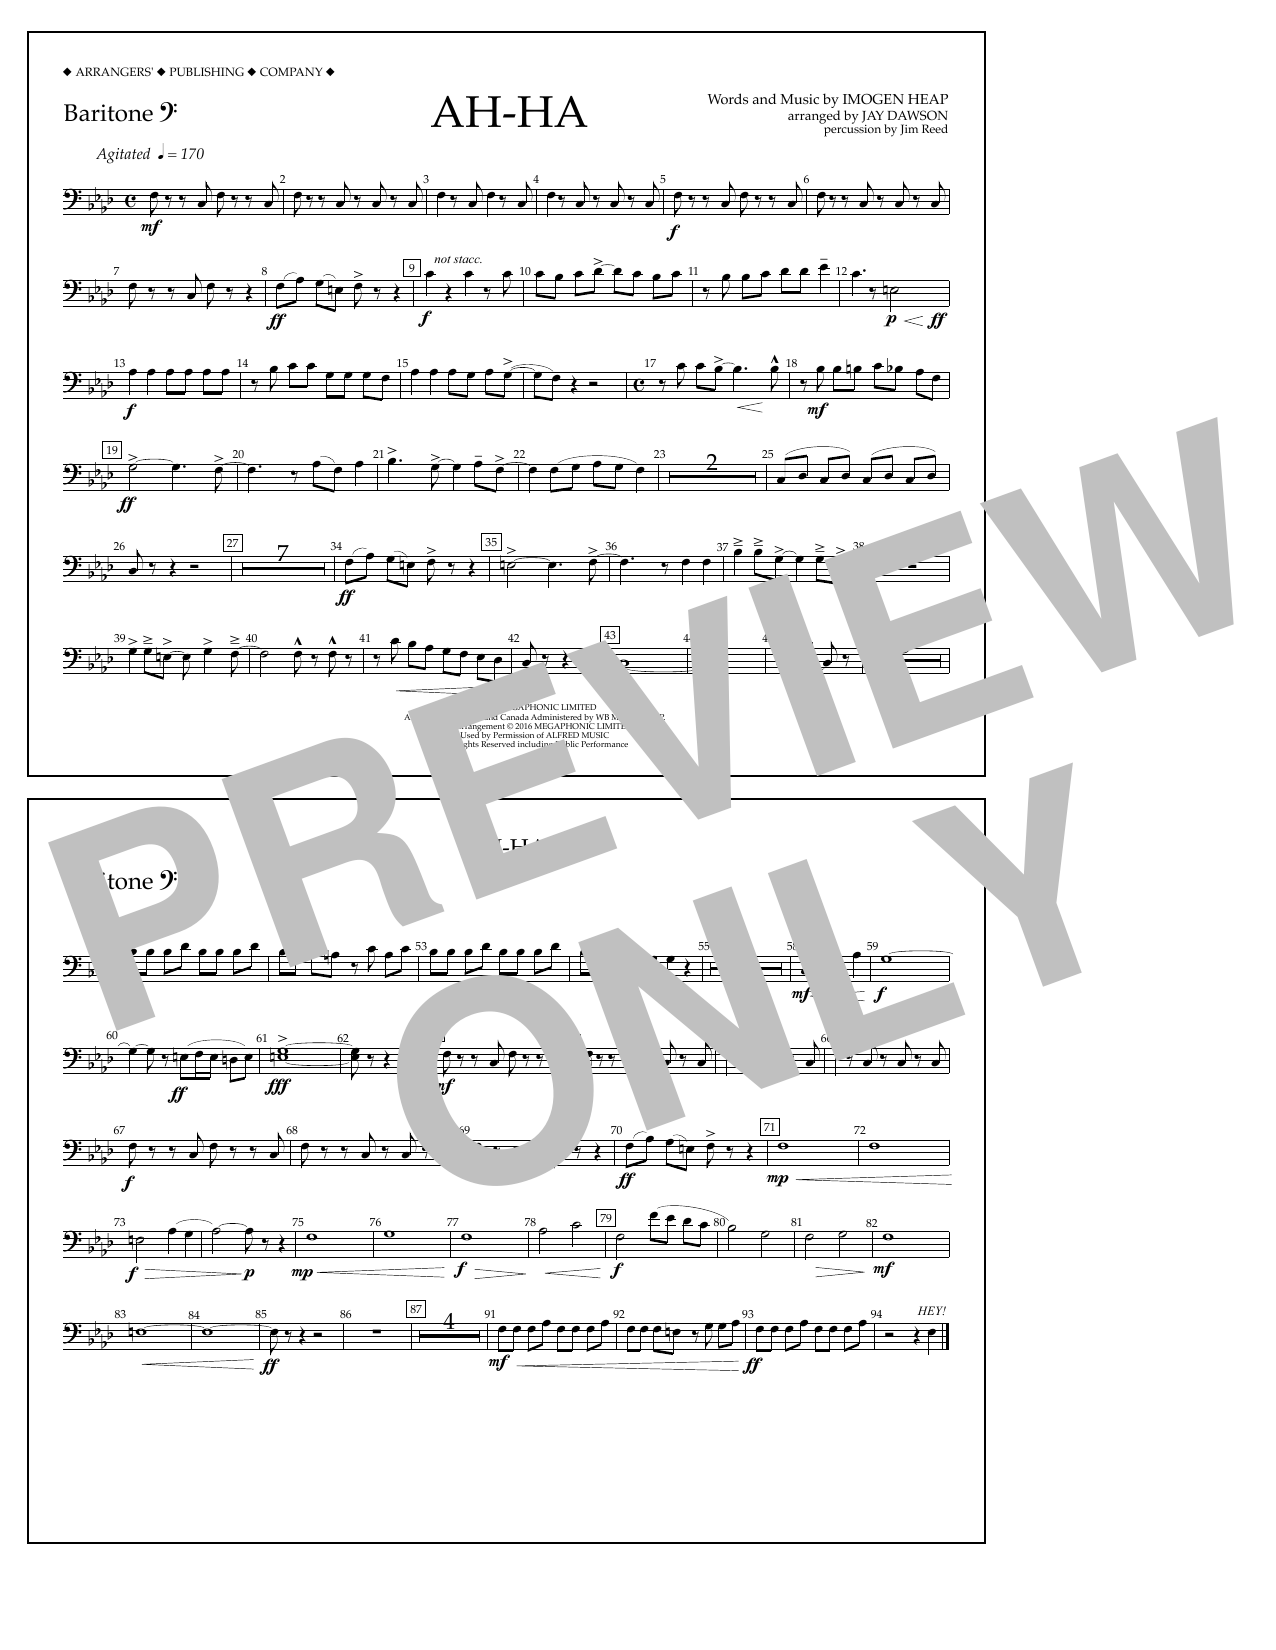 Jay Dawson Ah-ha - Baritone B.C. Sheet Music Notes & Chords for Marching Band - Download or Print PDF